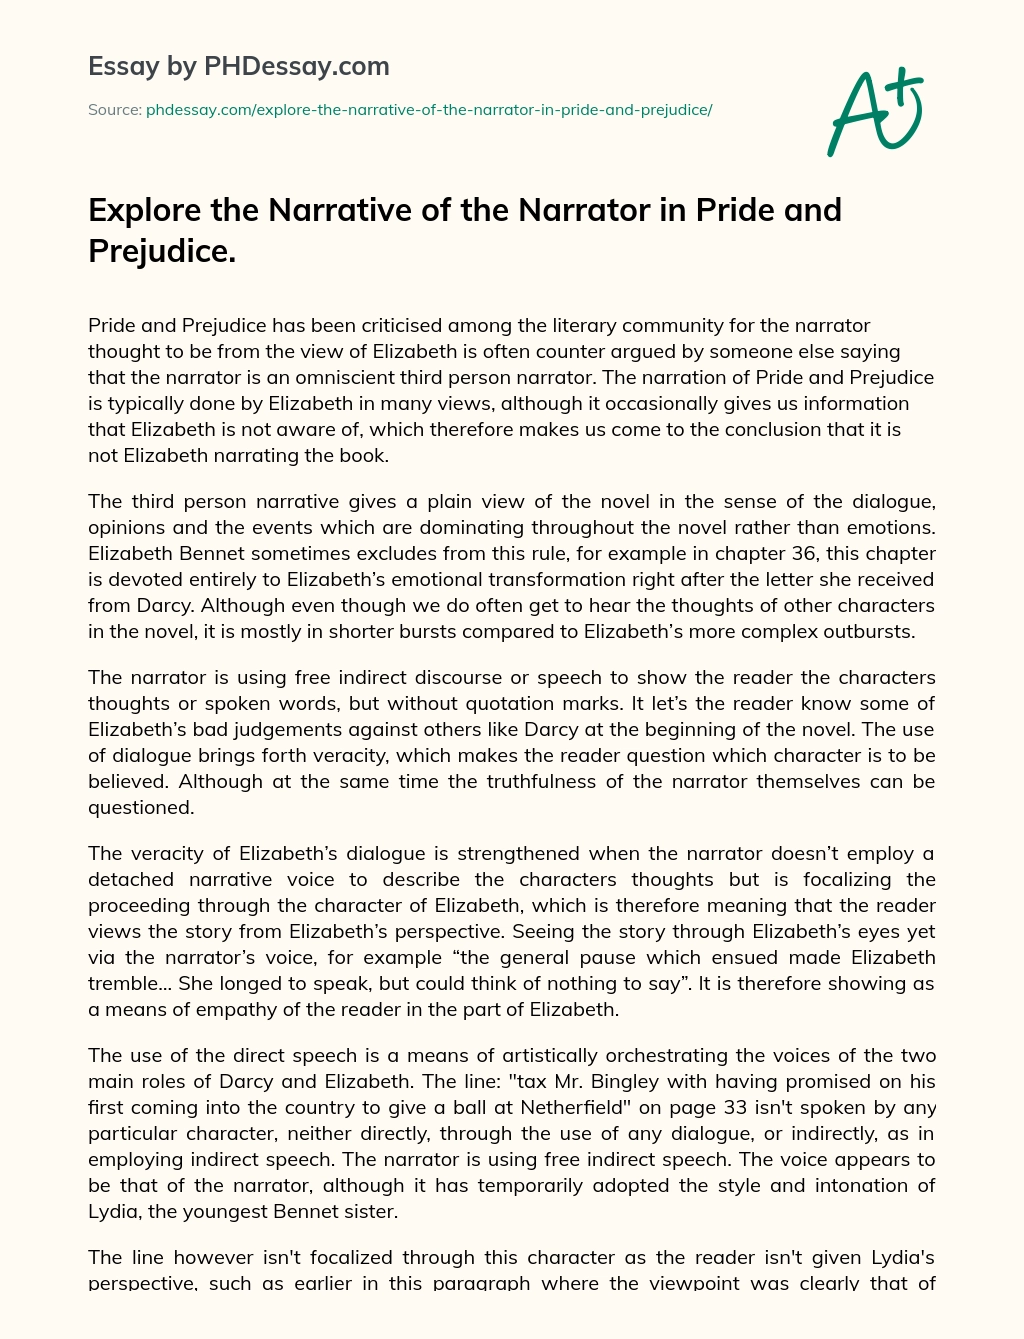 Explore the Narrative of the Narrator in Pride and Prejudice. essay